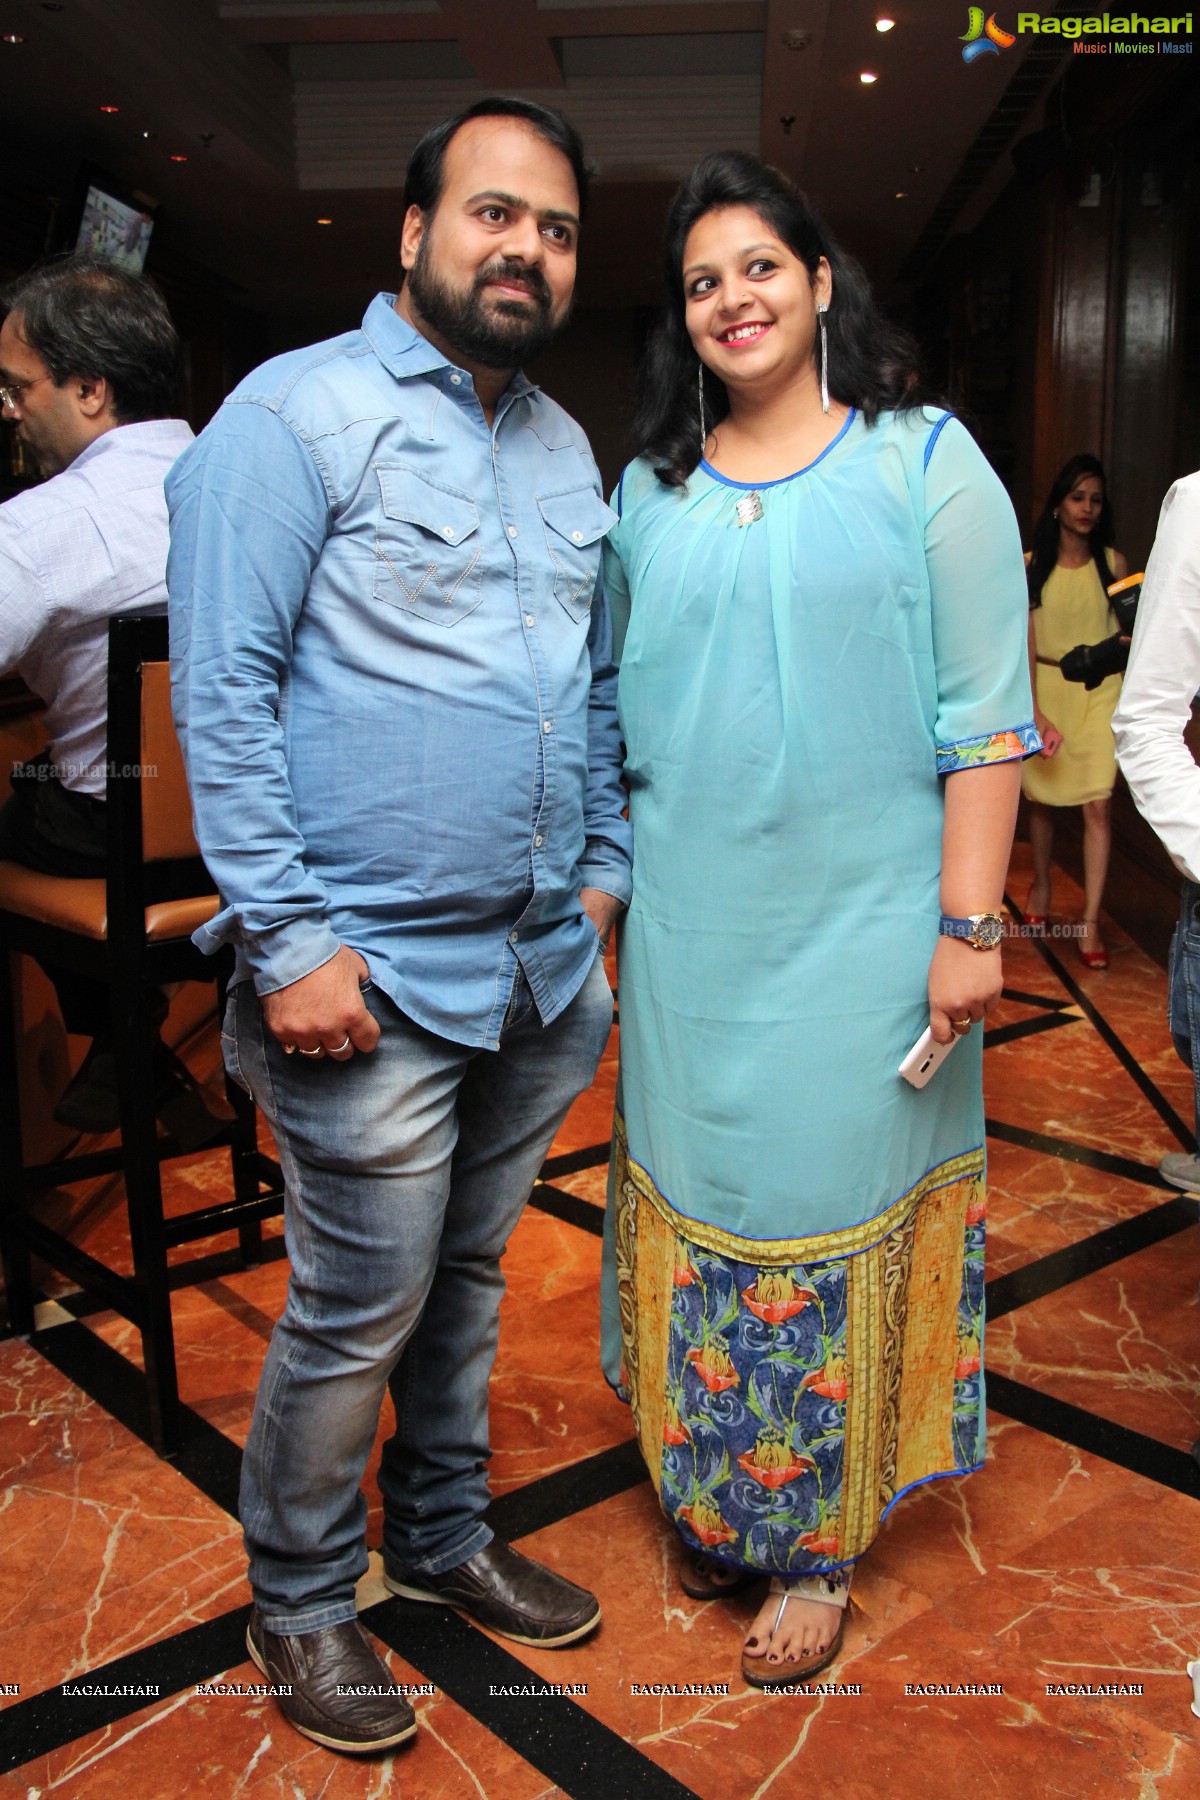 Nanda Jaju Bhutada Birthday Celebrations at Hyderabad Marriott Hotel